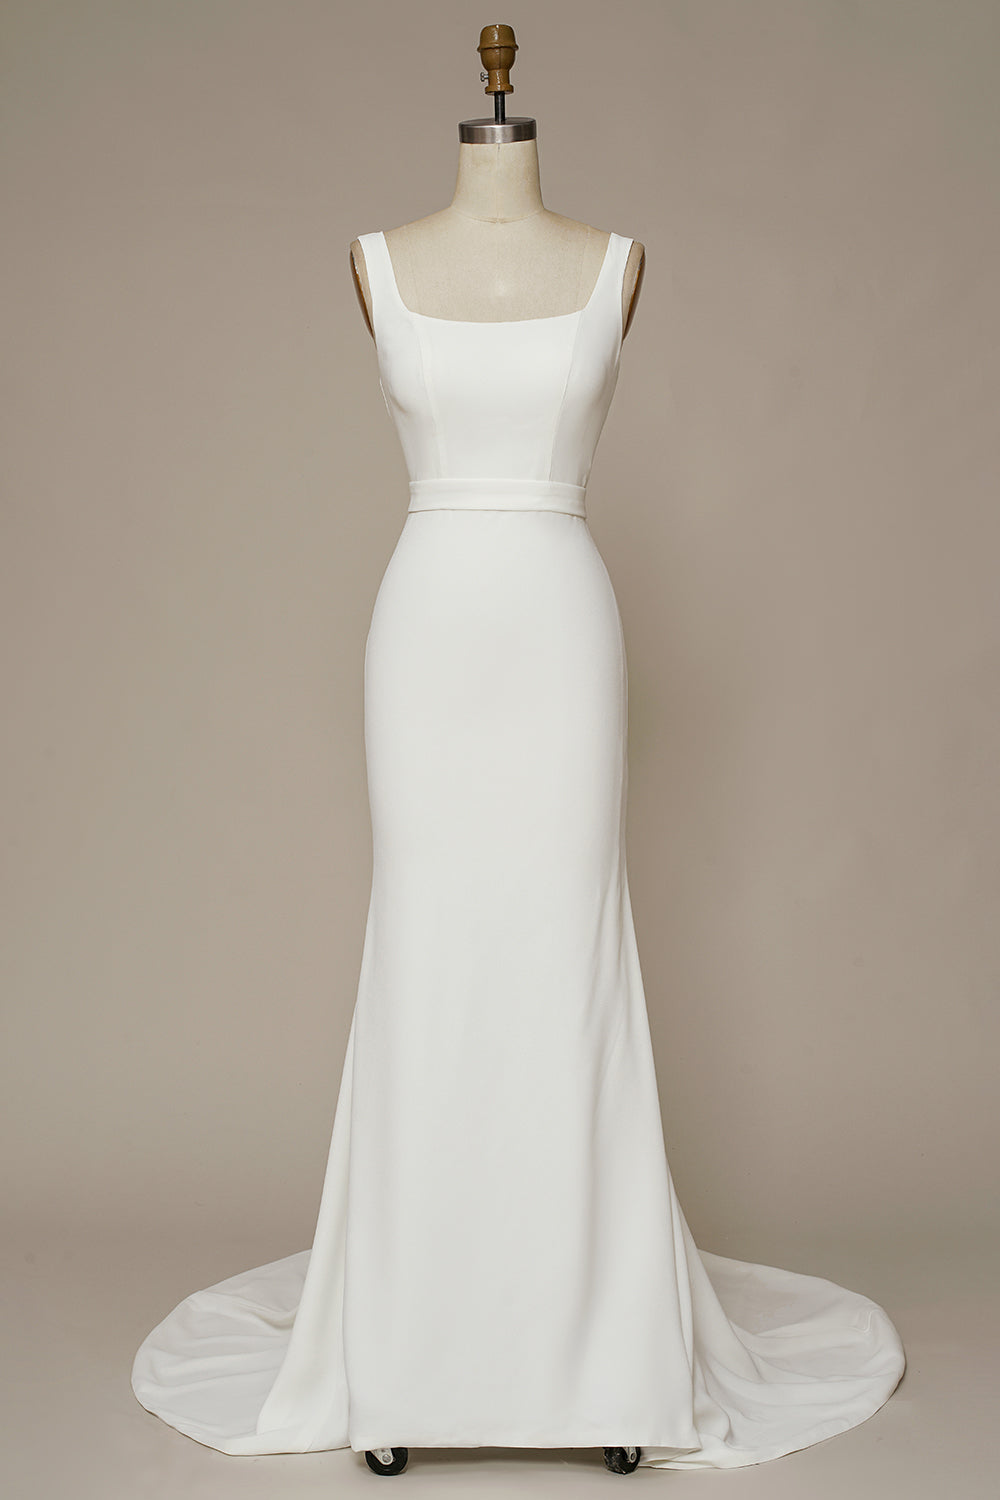 Mermaid Square Neck Corset Wedding Dress outfit, Wedding Dress Under 1000